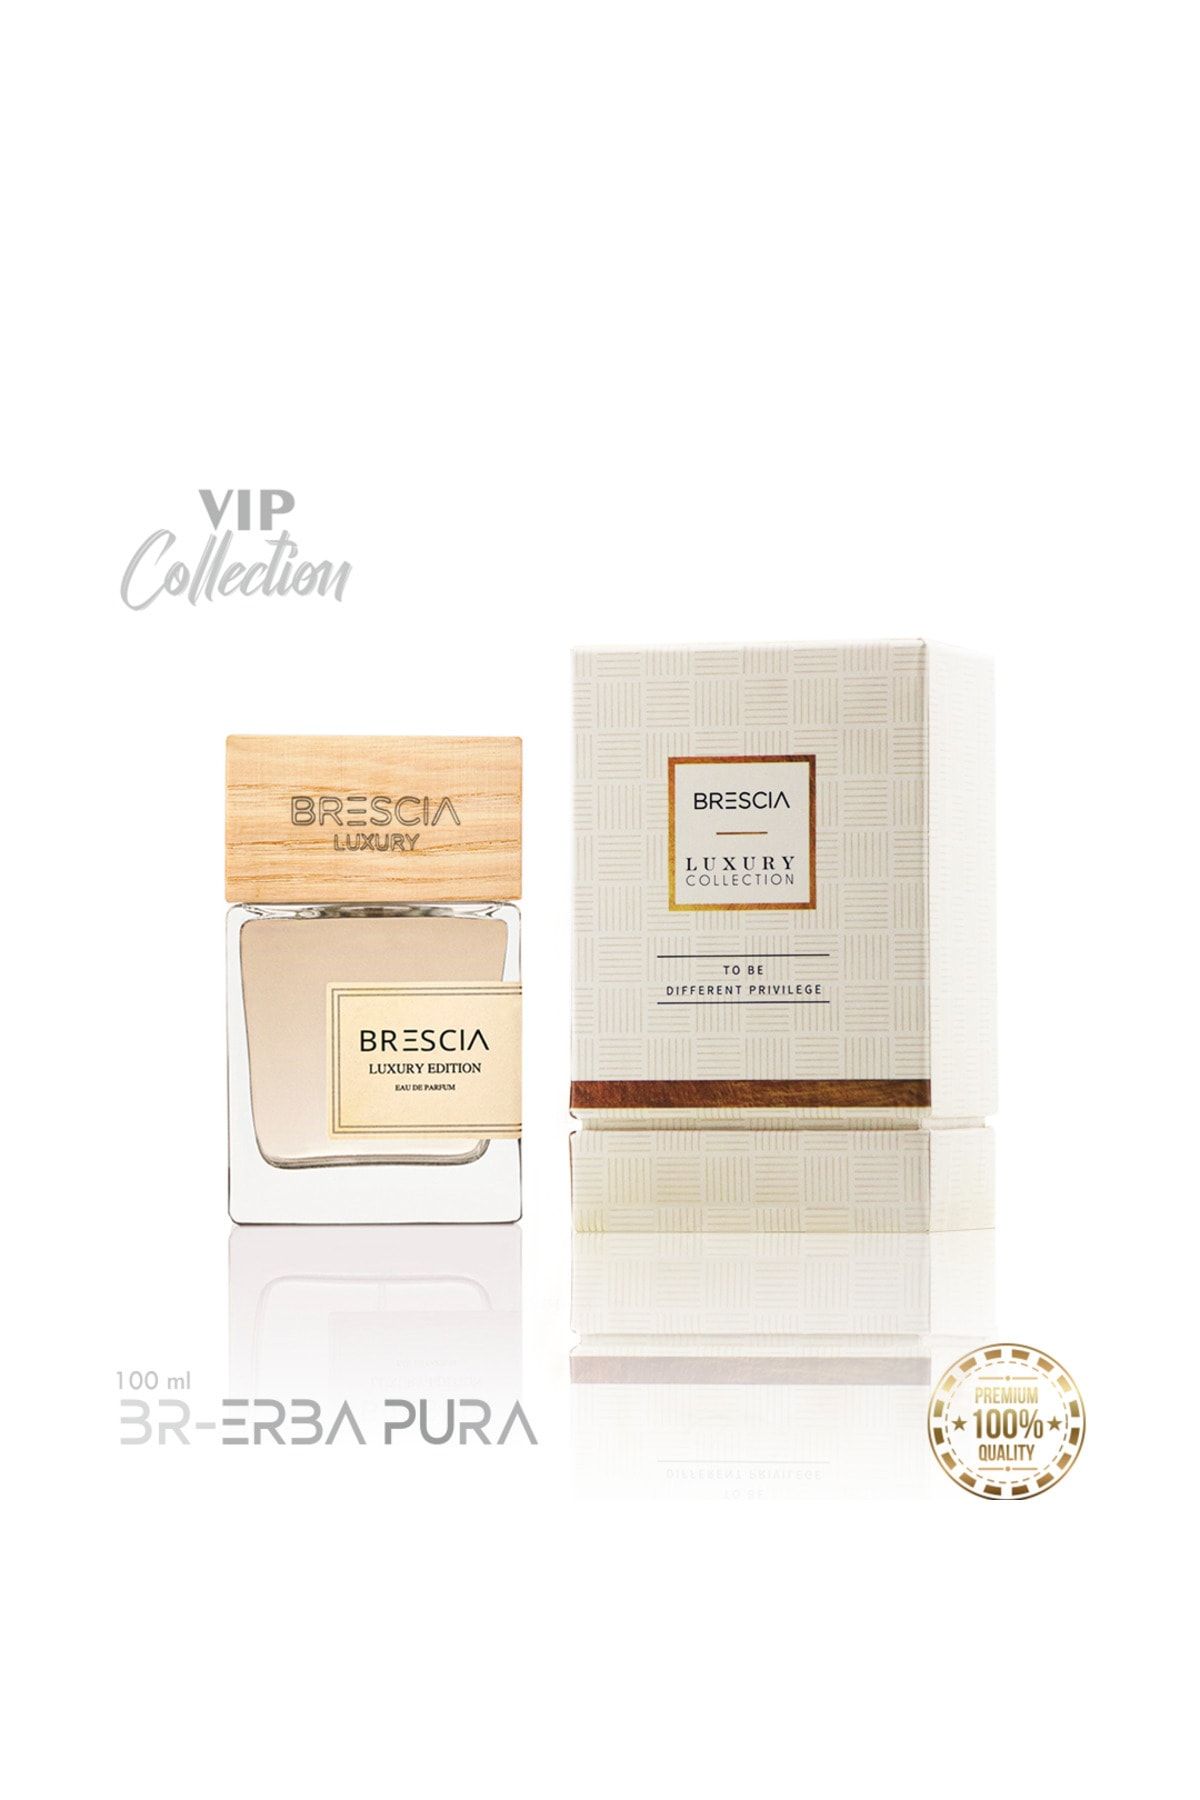 Brescia Vip Collection VIP10 SspirøErbaPura Extrait de Parfum 100ml